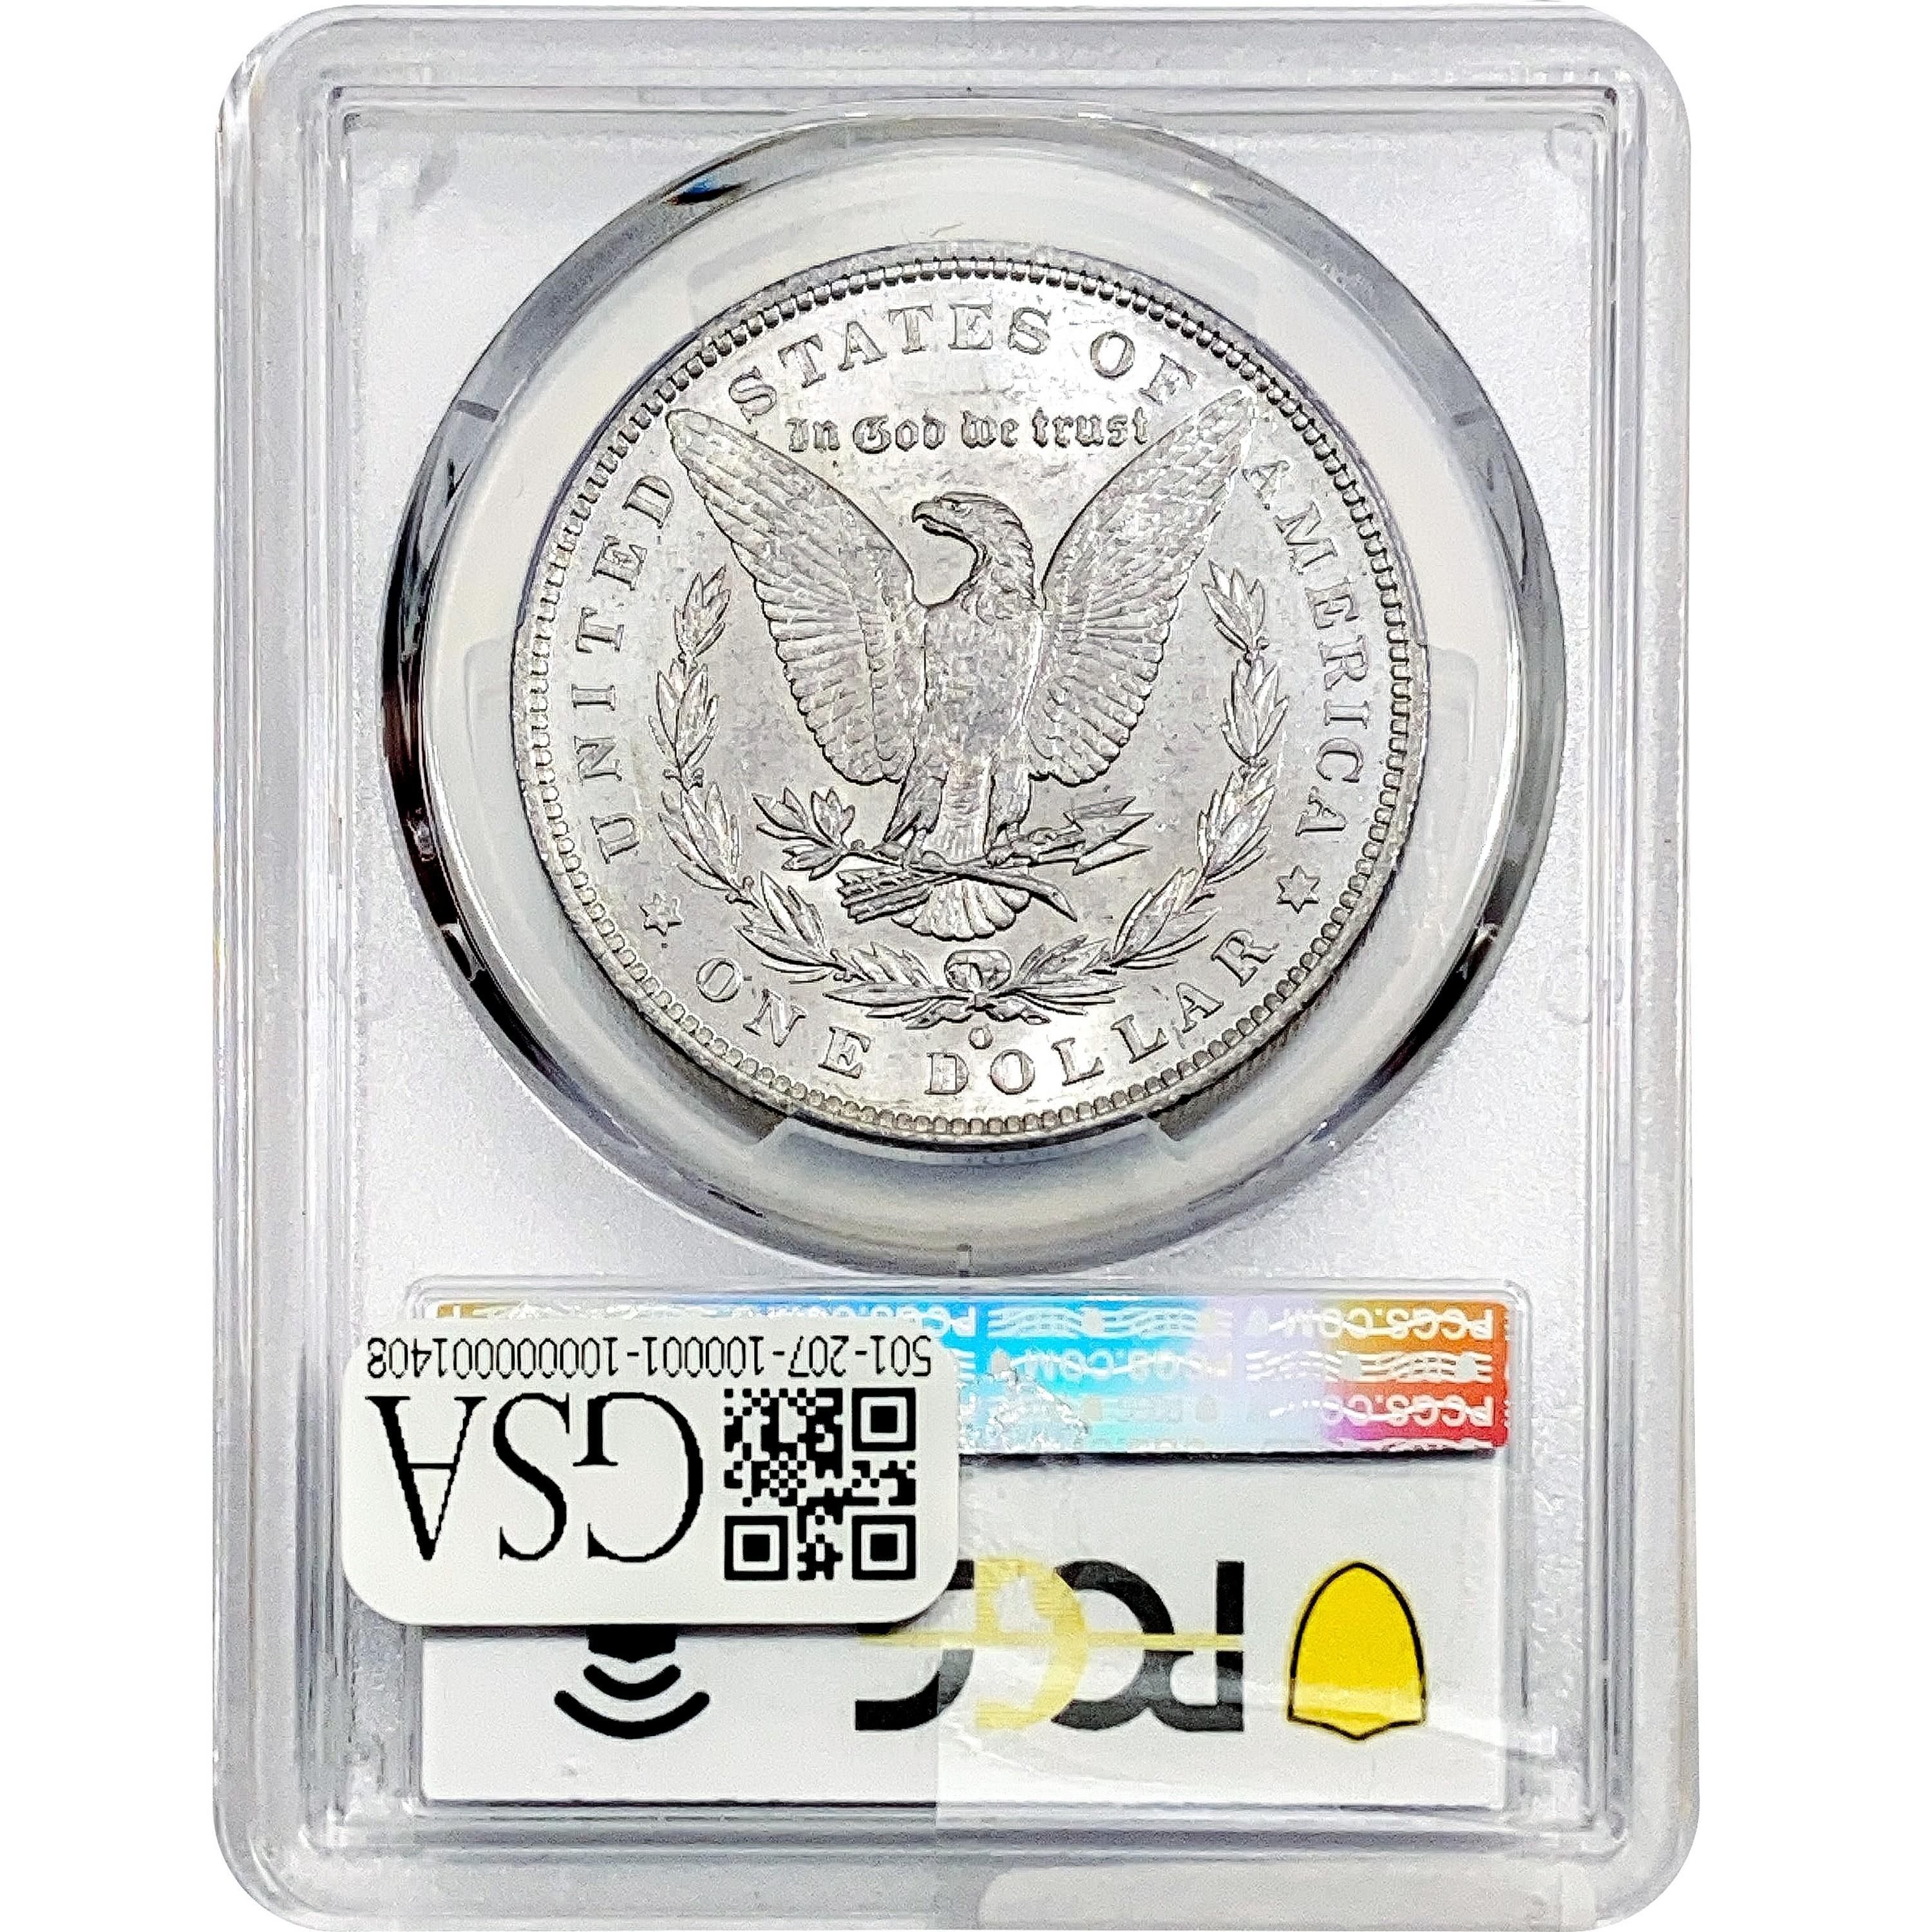 1889-O Morgan Silver Dollar PCGS MS63